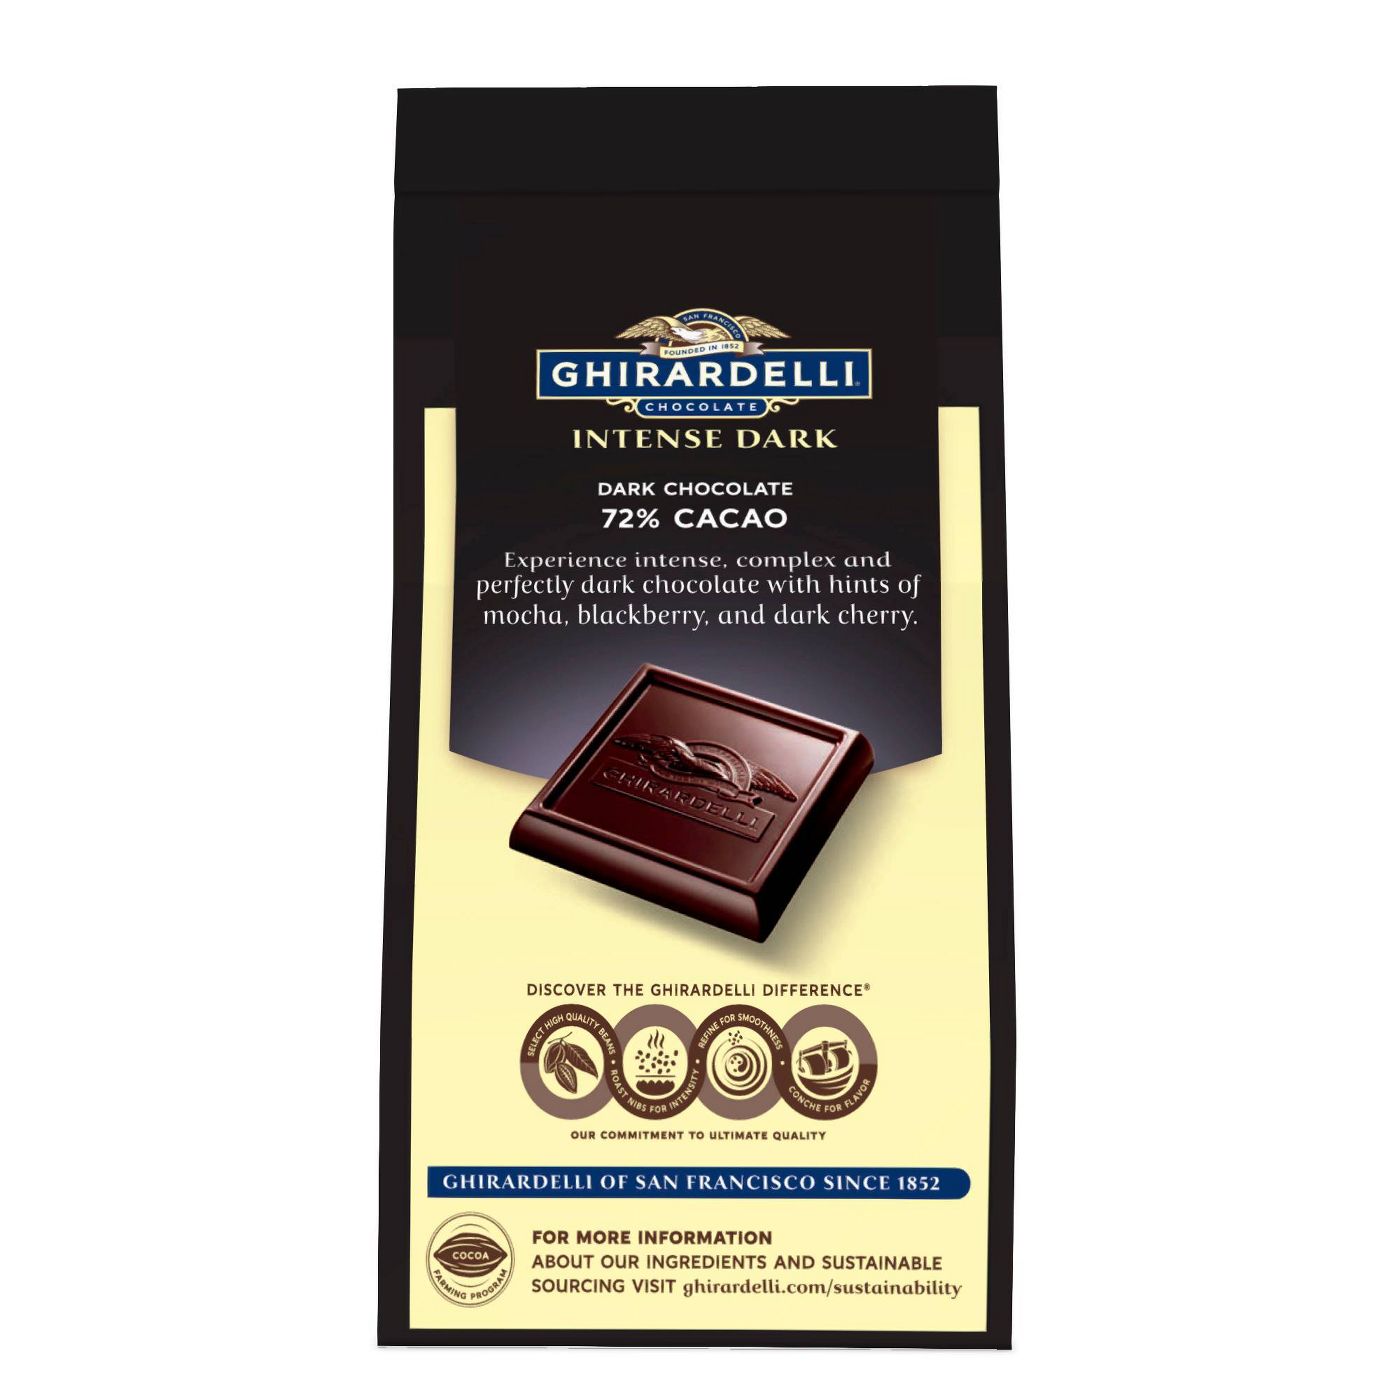 Ghirardelli Intense Dark Chocolate Squares, 72% Cacao, 4.87 oz